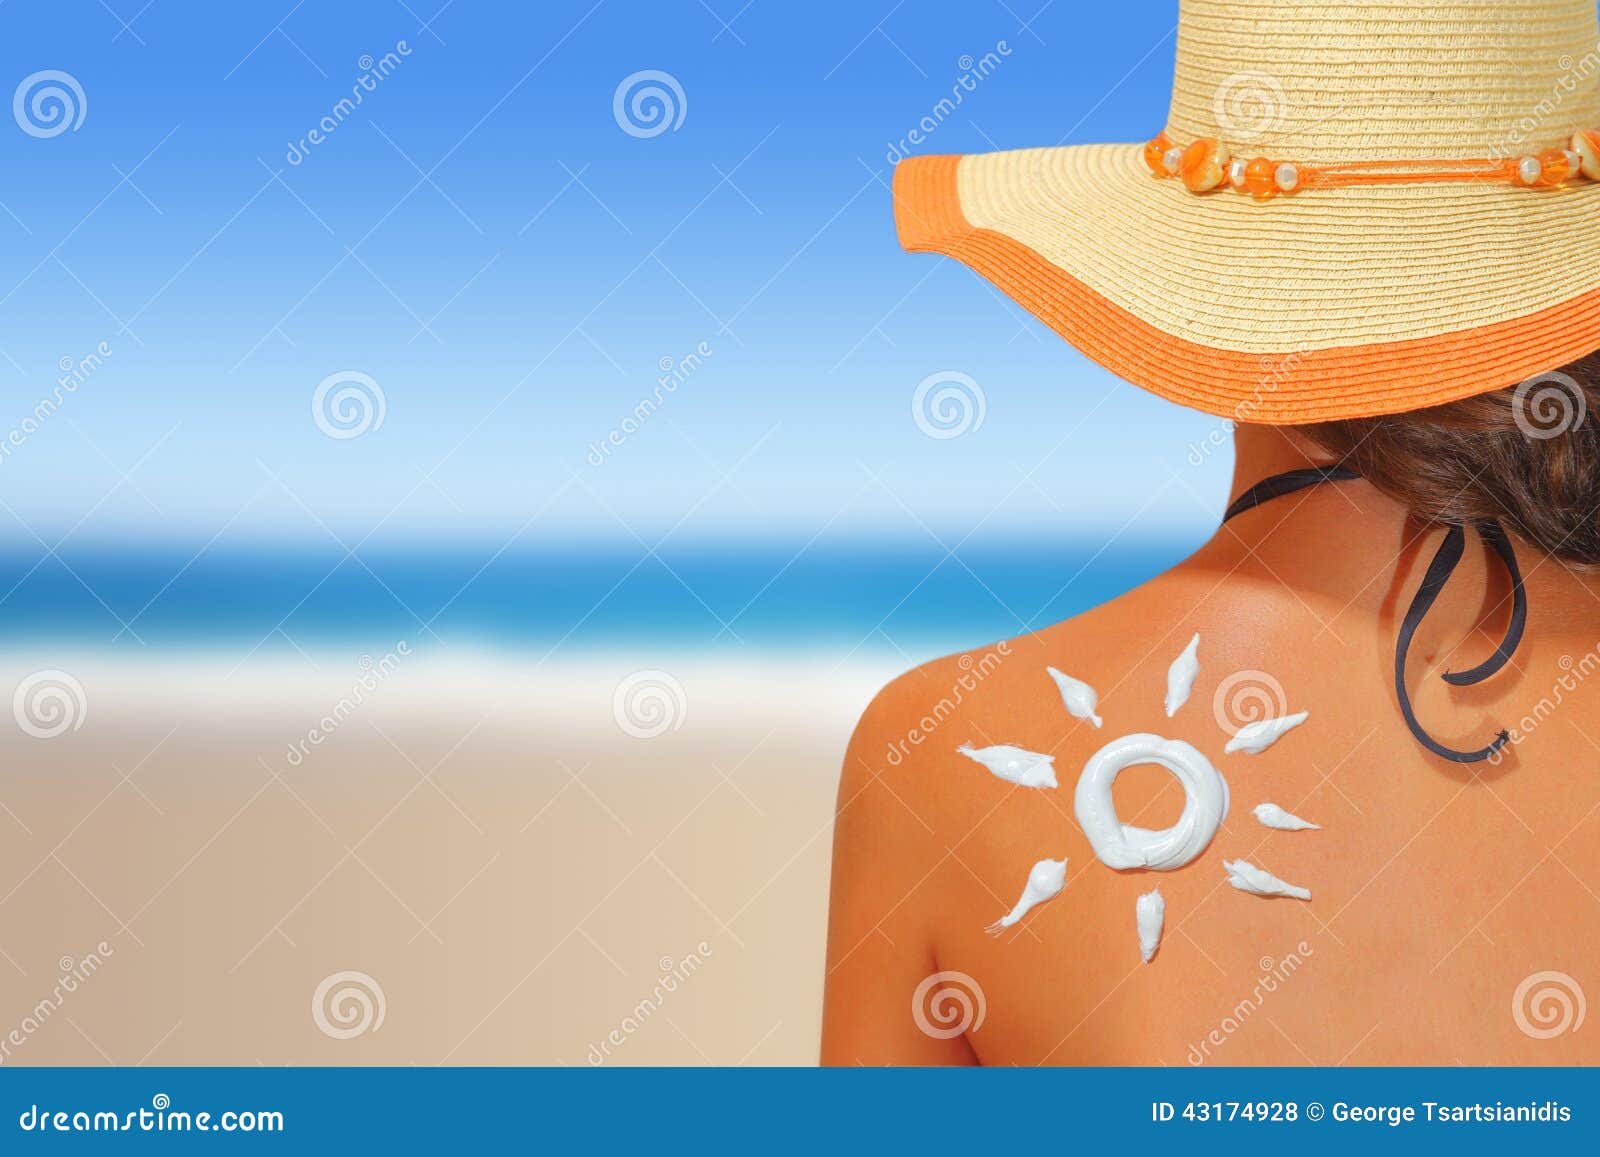 woman with sun d sunscreen